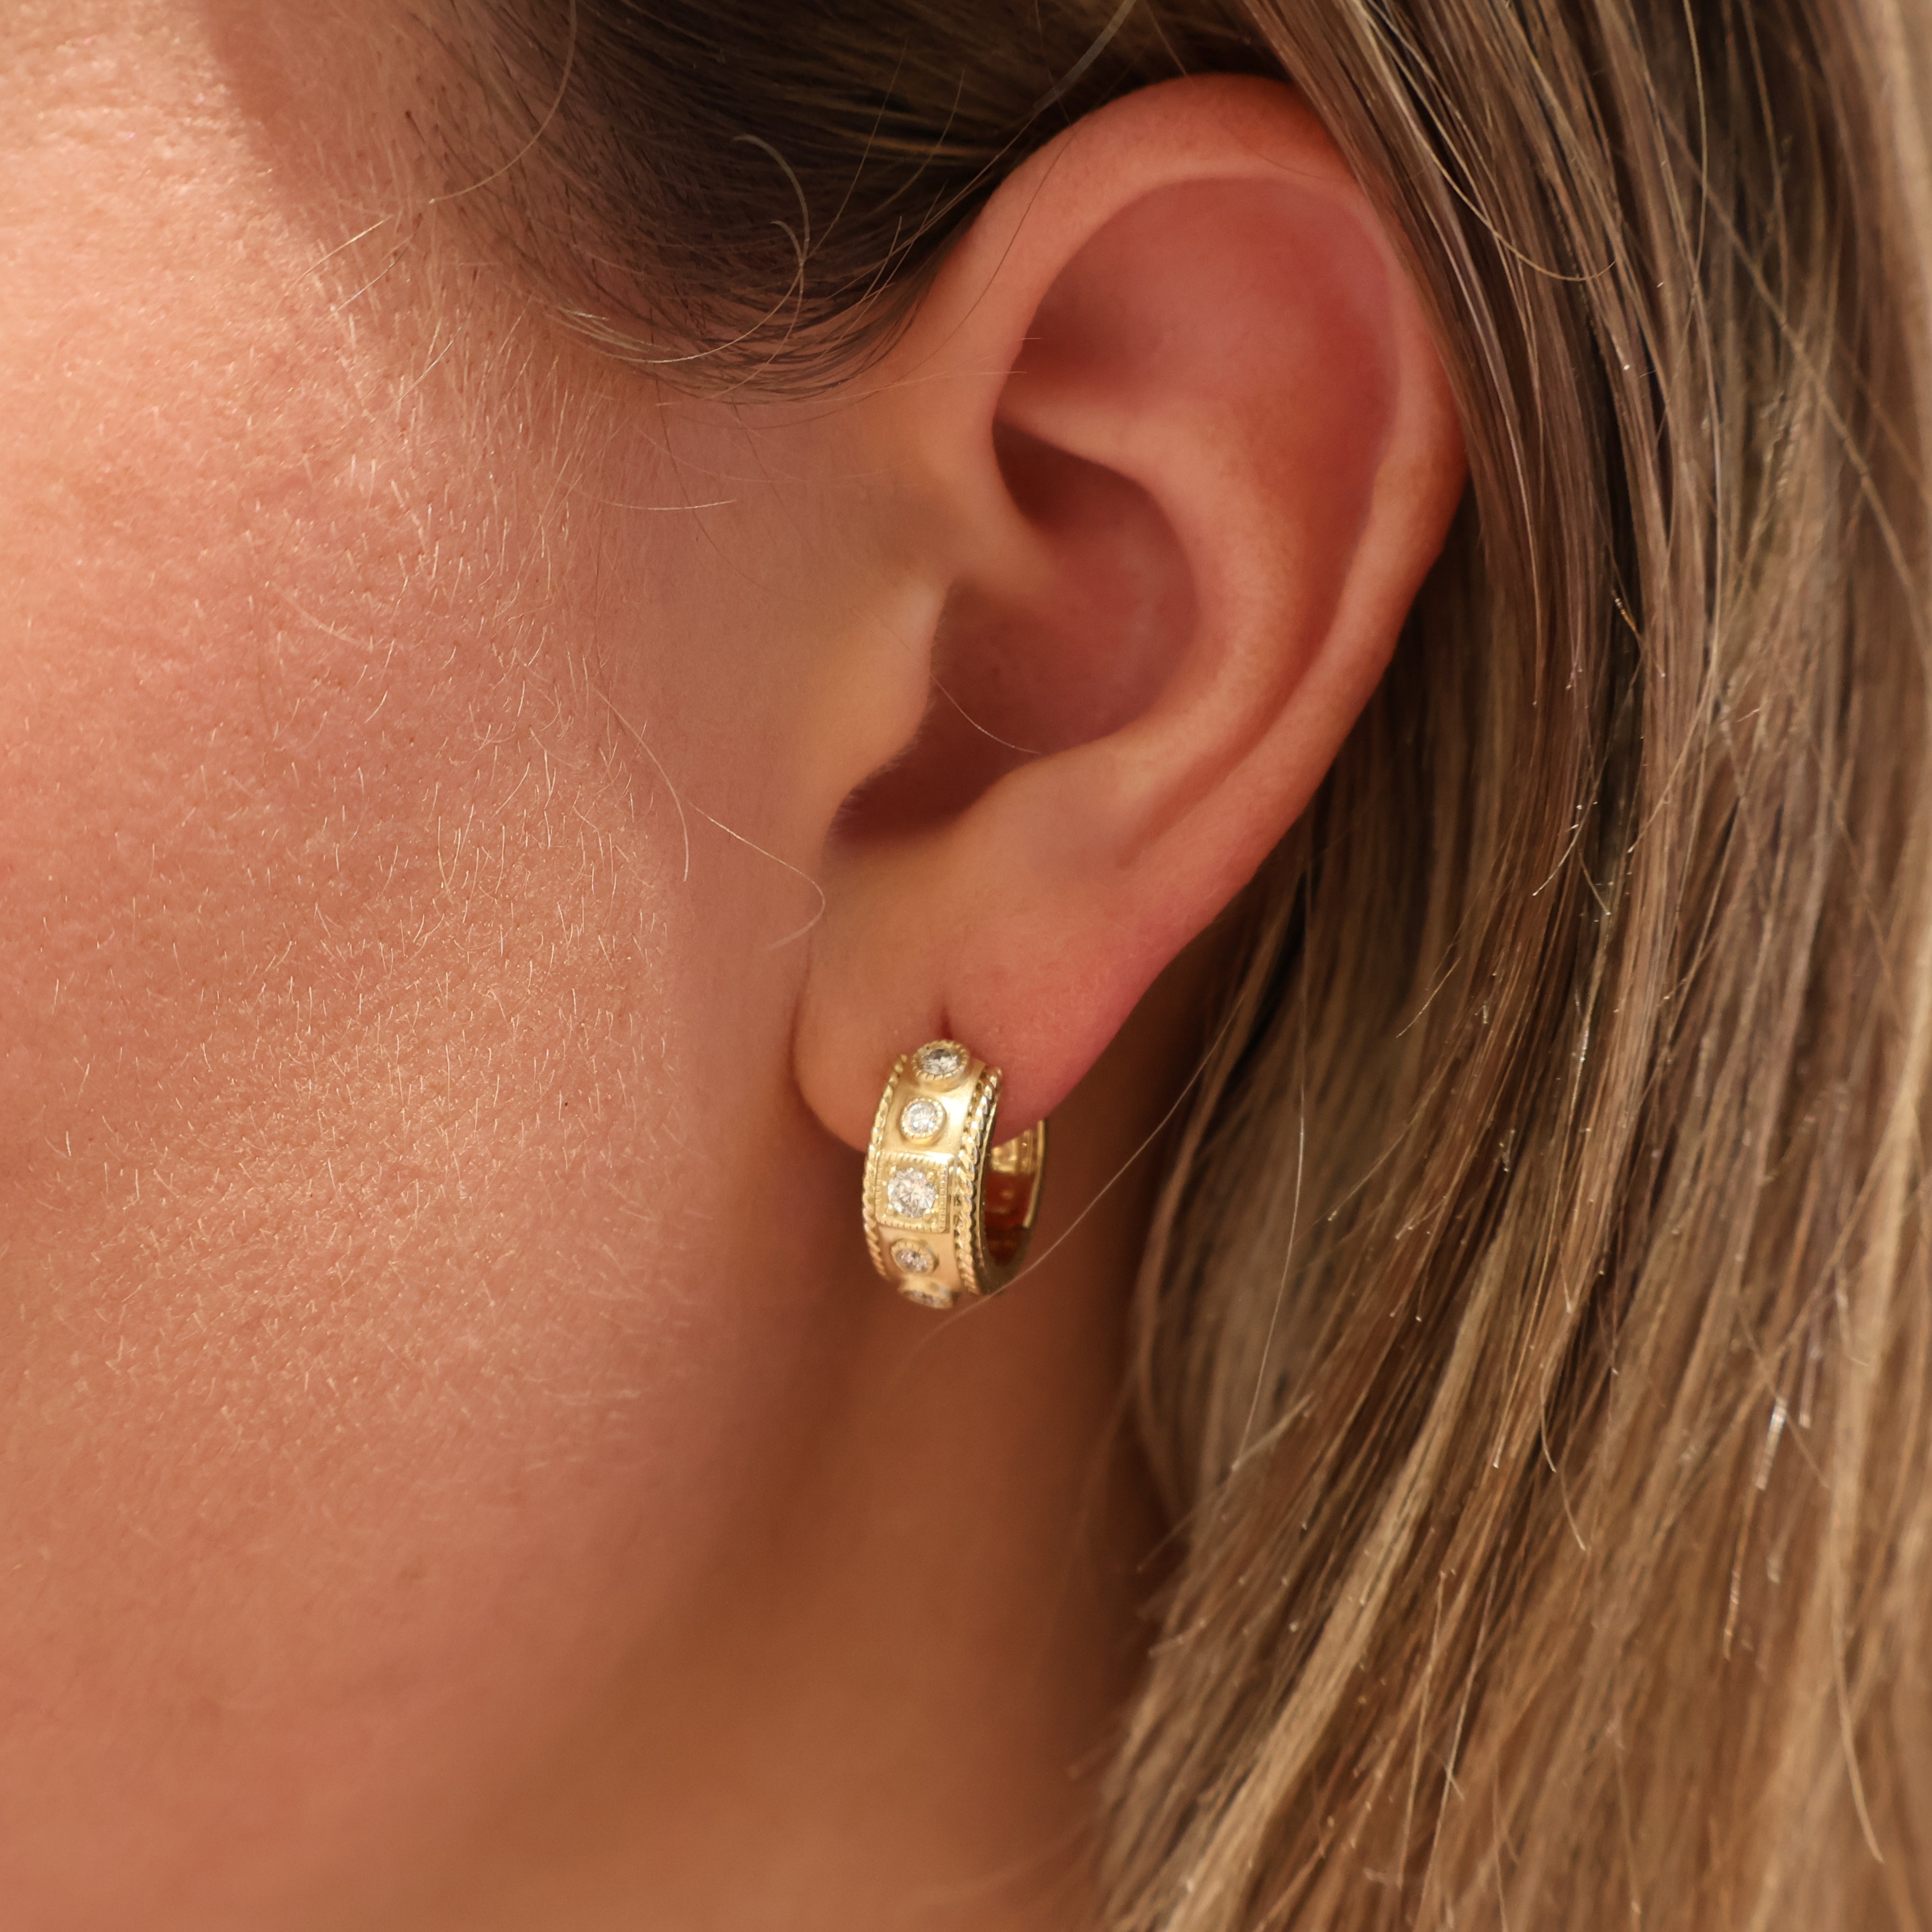 Penny Preville 18k Yellow Gold Amulet Diamond Earrings